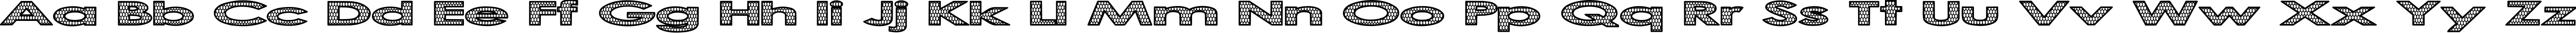 Пример написания английского алфавита шрифтом Scaling the Dragon